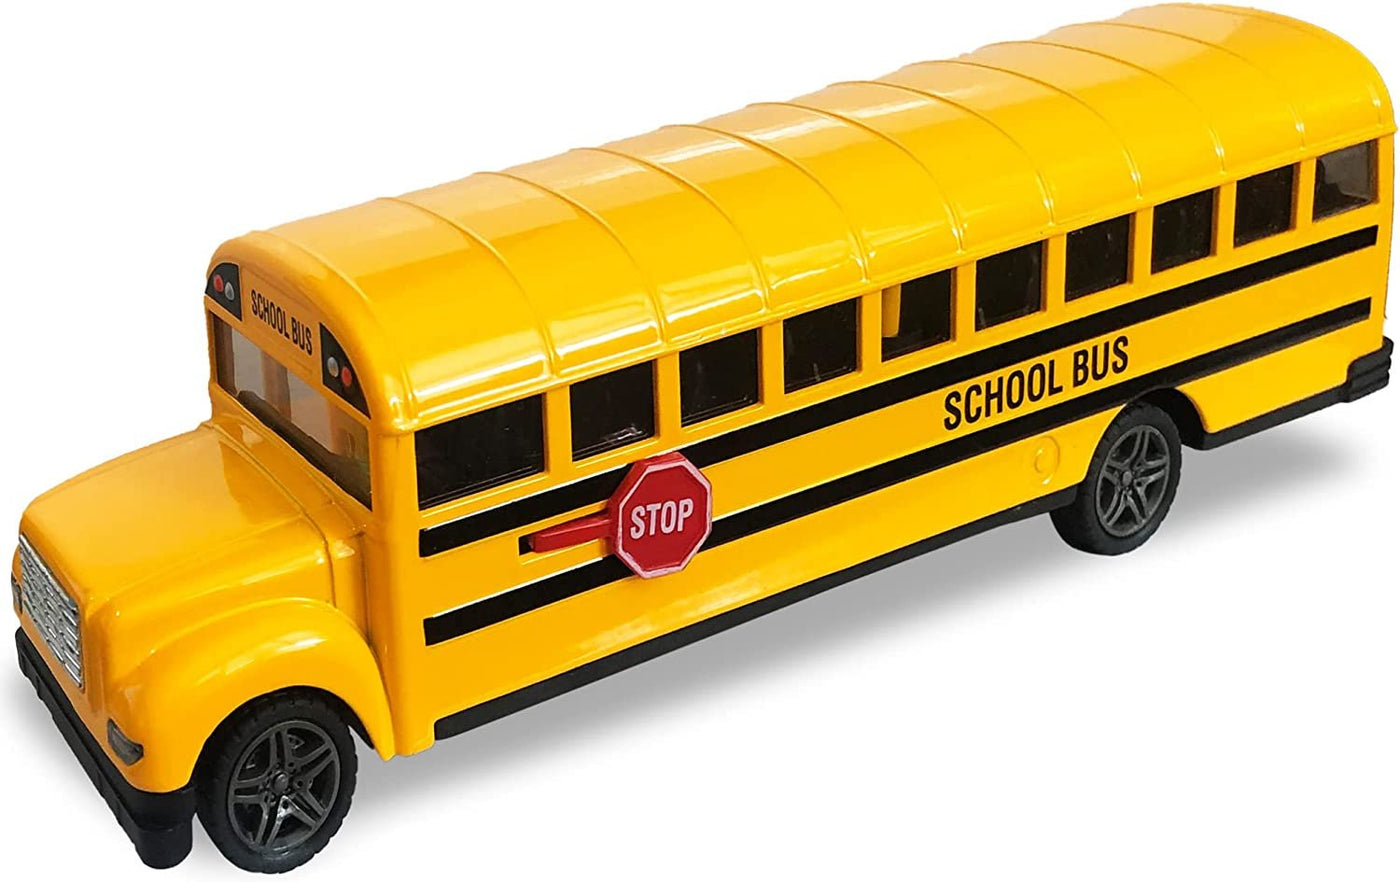 Large City Bus Plastic High Quality Children's Toy Kids Free wheel Vehicle  Kids